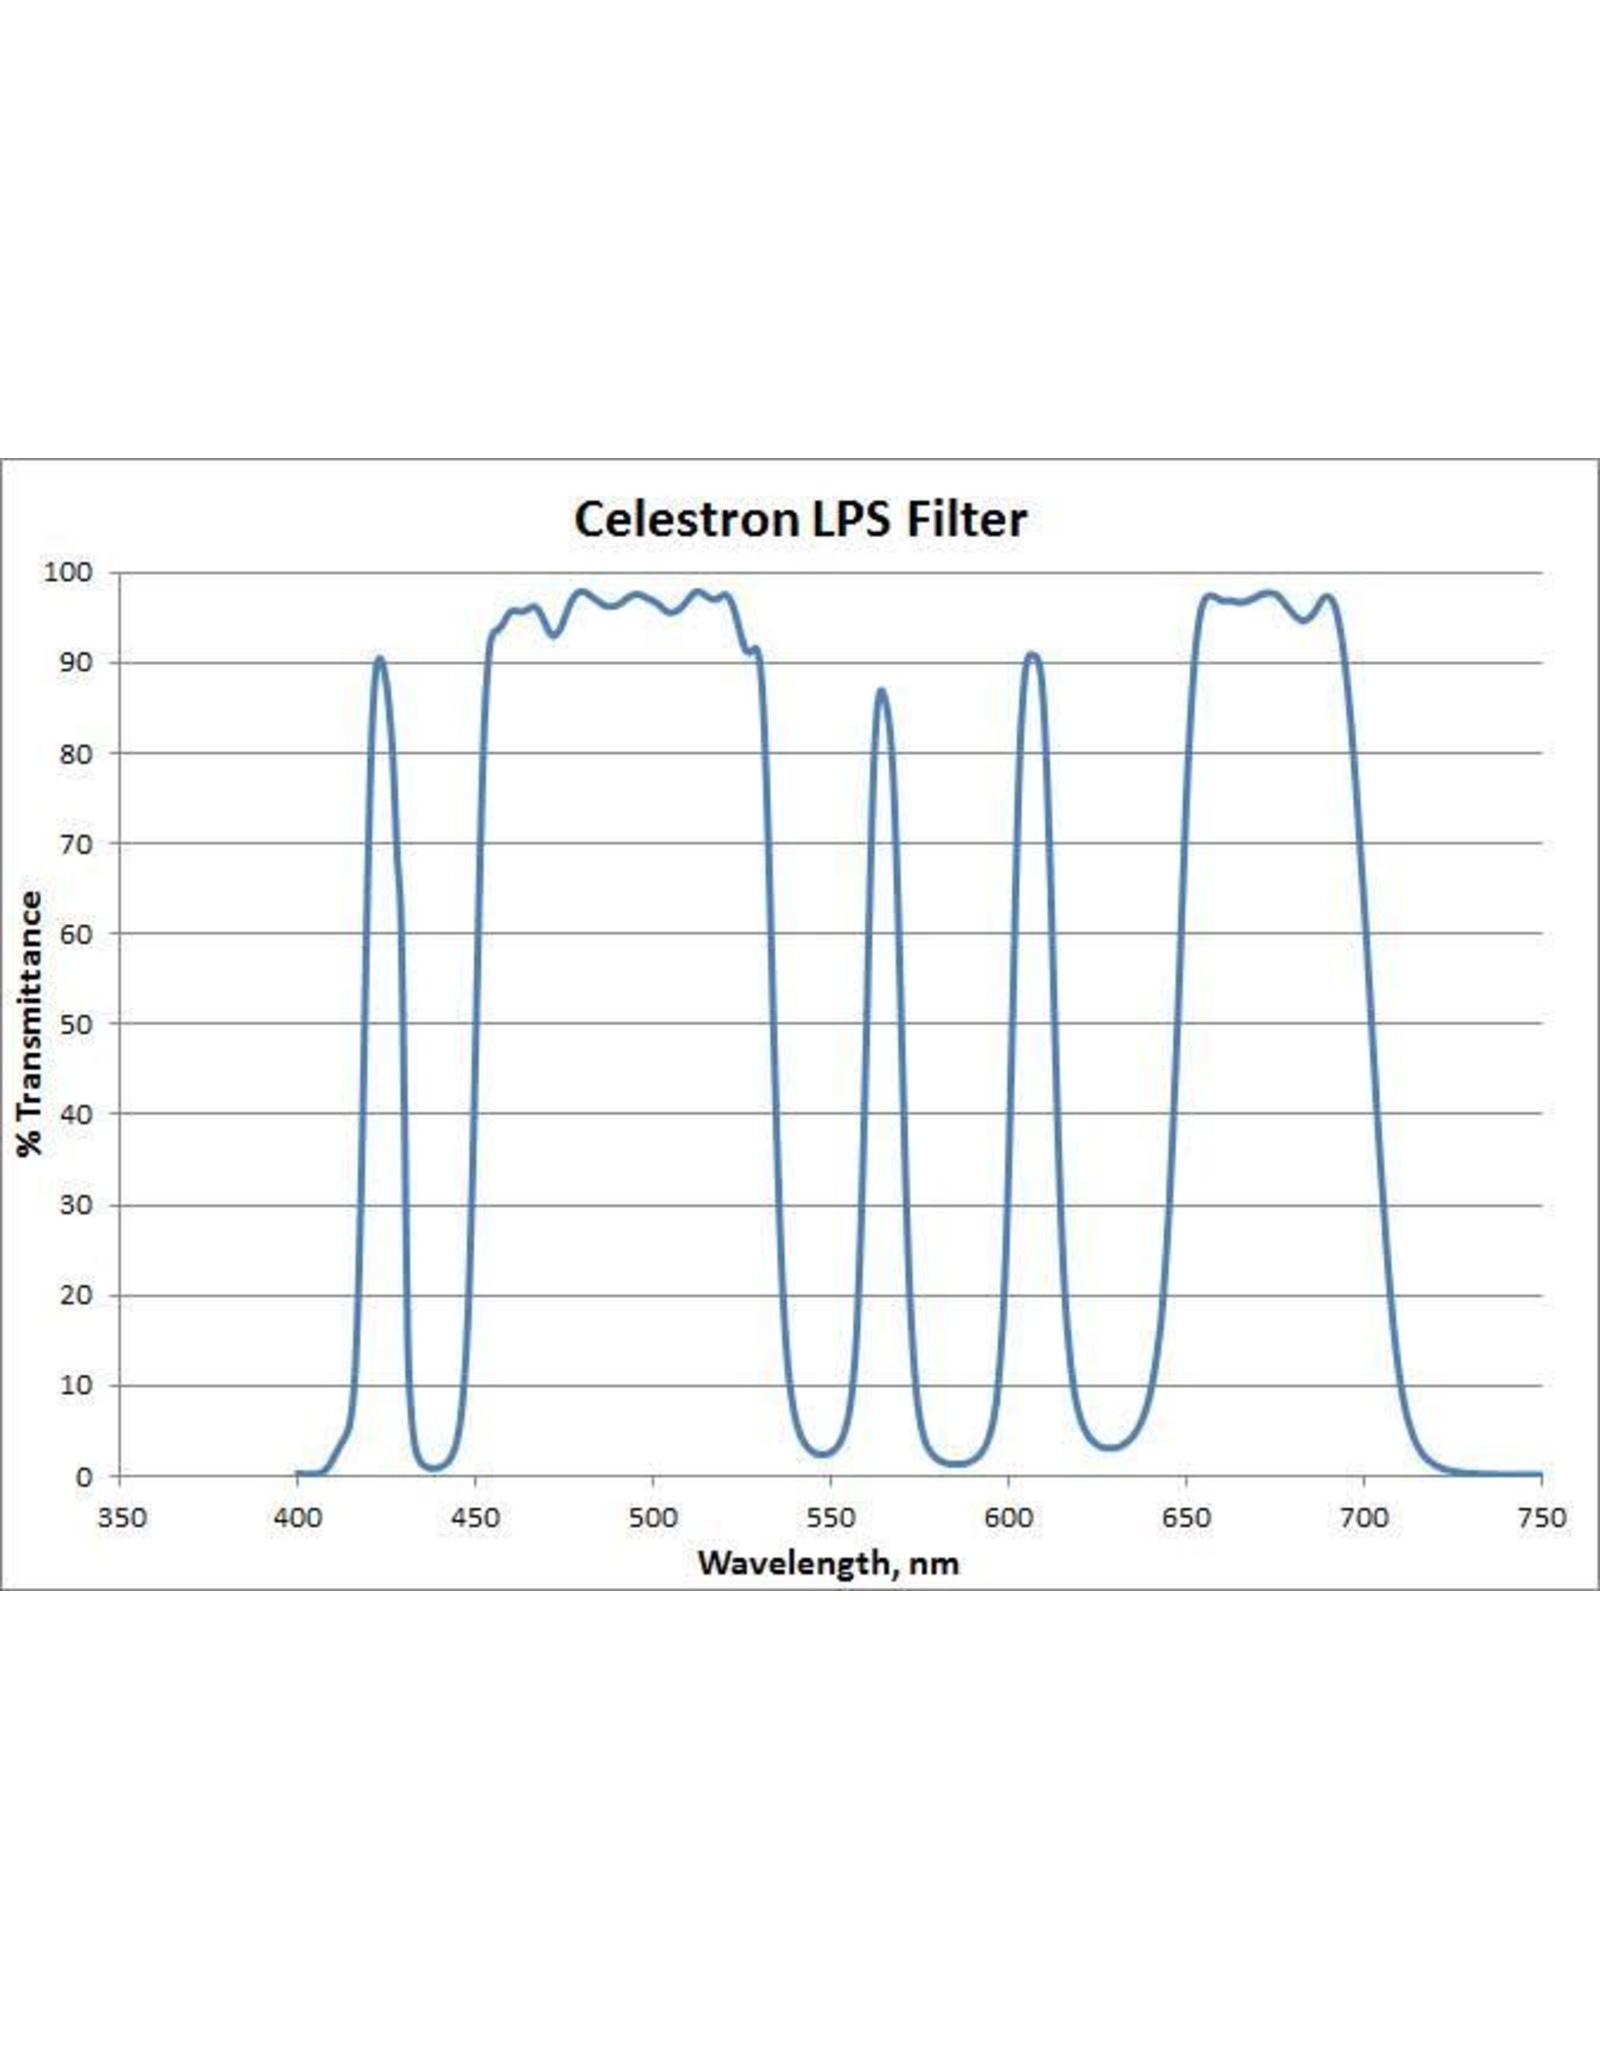 Celestron Celestron Light Pollution Imaging Filter RASA 8